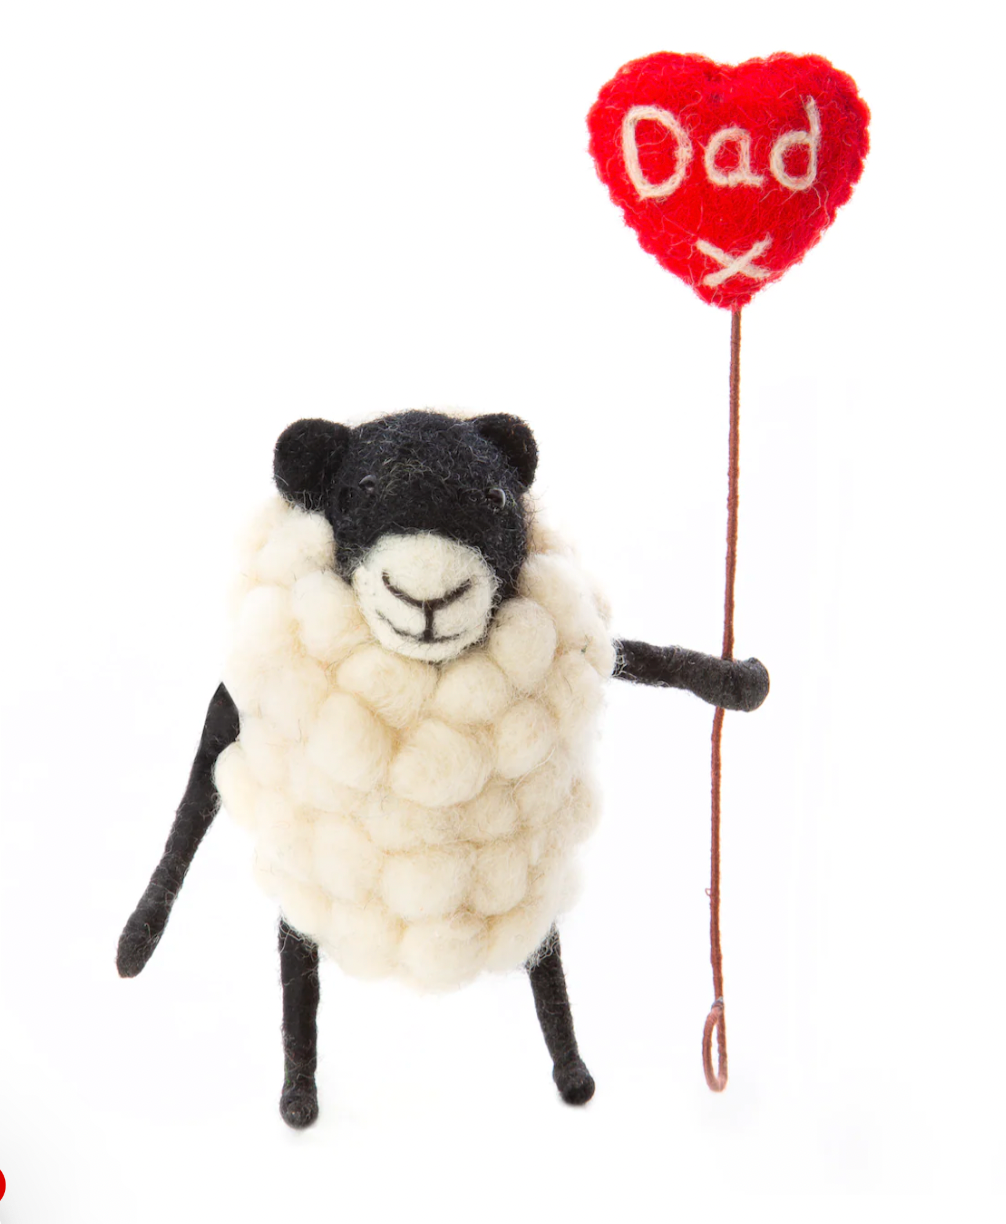 Sheep with Dad Heart Balloon